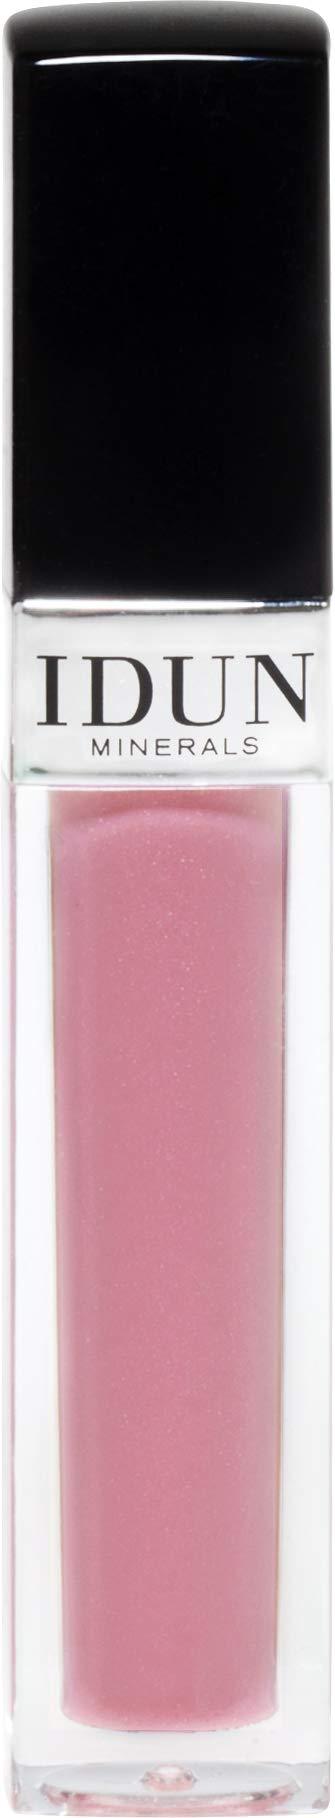 [Australia] - IDUN Minerals Lip Gloss Felicia - Highly Pigmented For Illusion of Plump Lips, Shiny Finish - Moisturizing w/Creamy Texture - Vegan, Vitamin E, Safe for Sensitive Skin - Hot Pink, 0.03 fl oz 